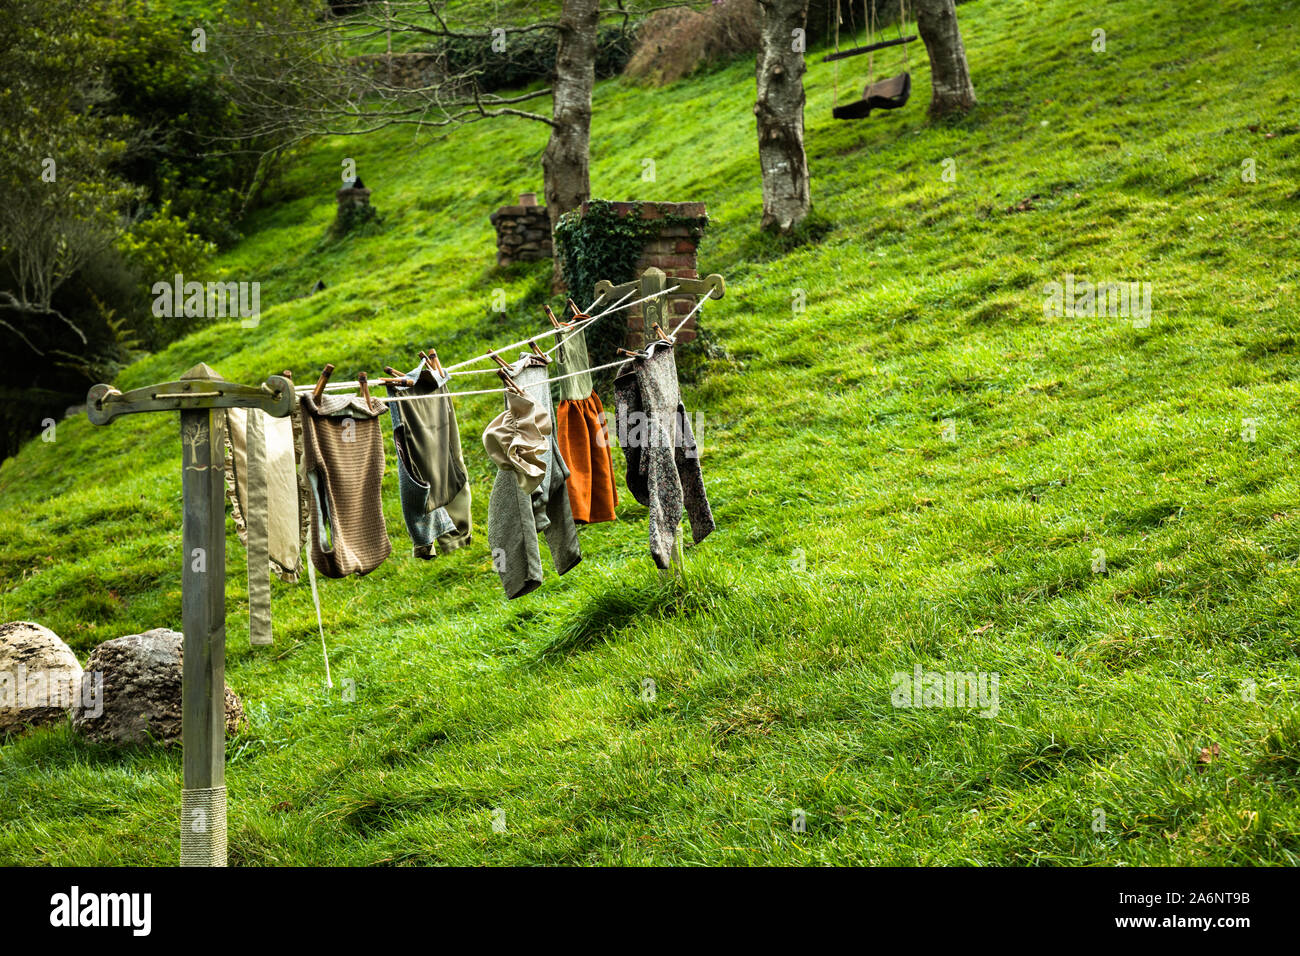 Laundry out to dry in the Hobbiton Movie Set, Matamata, New Zealand Stock Photo